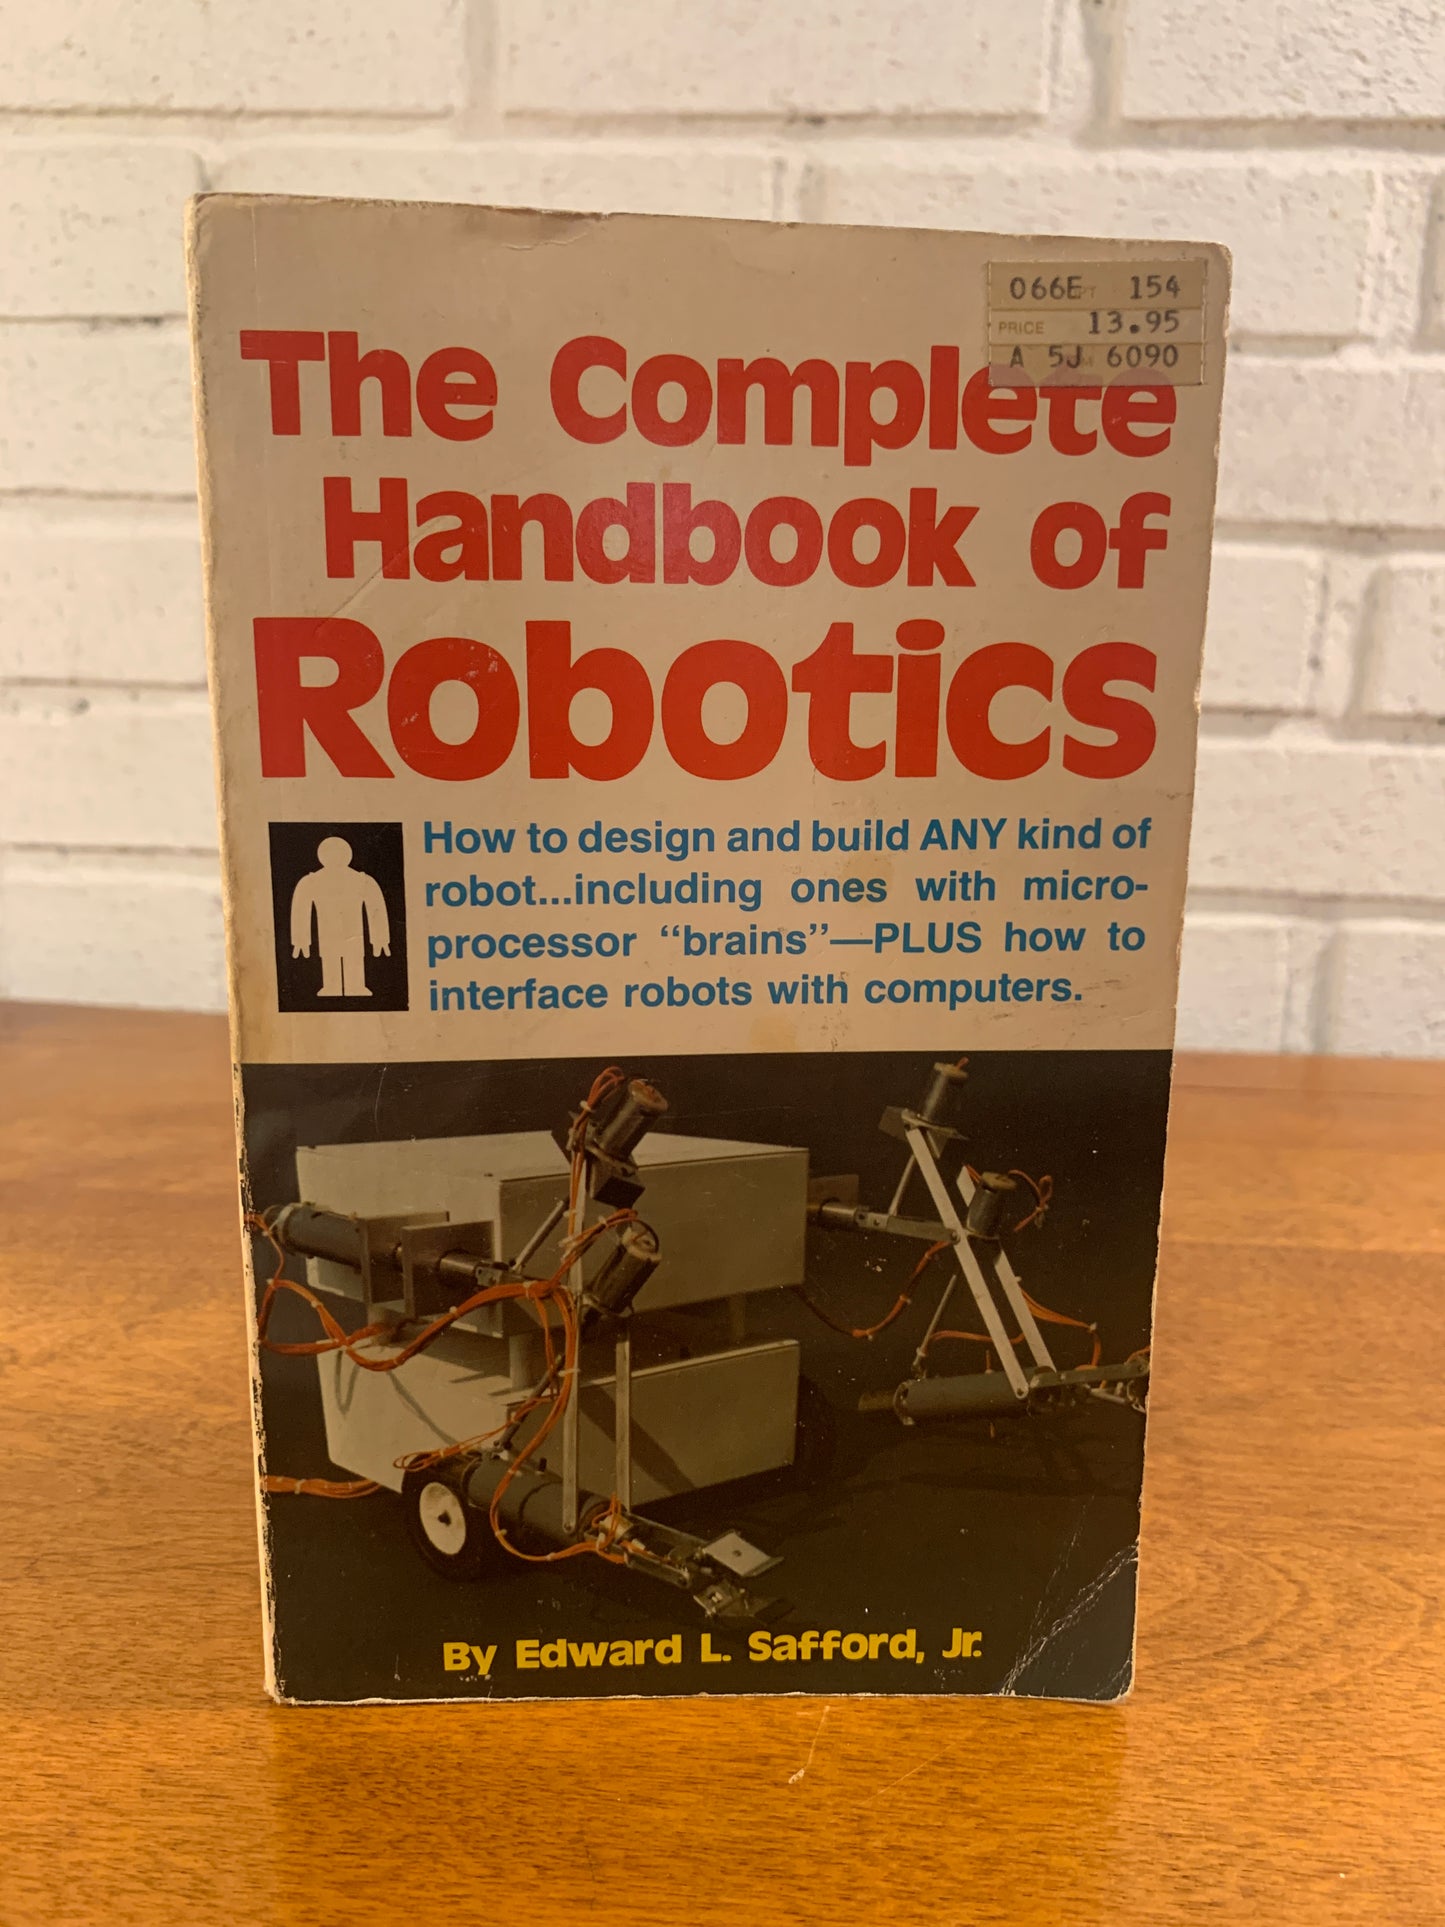 The Complete Handbook of Robotics by Edward L., Jr. Safford,1978